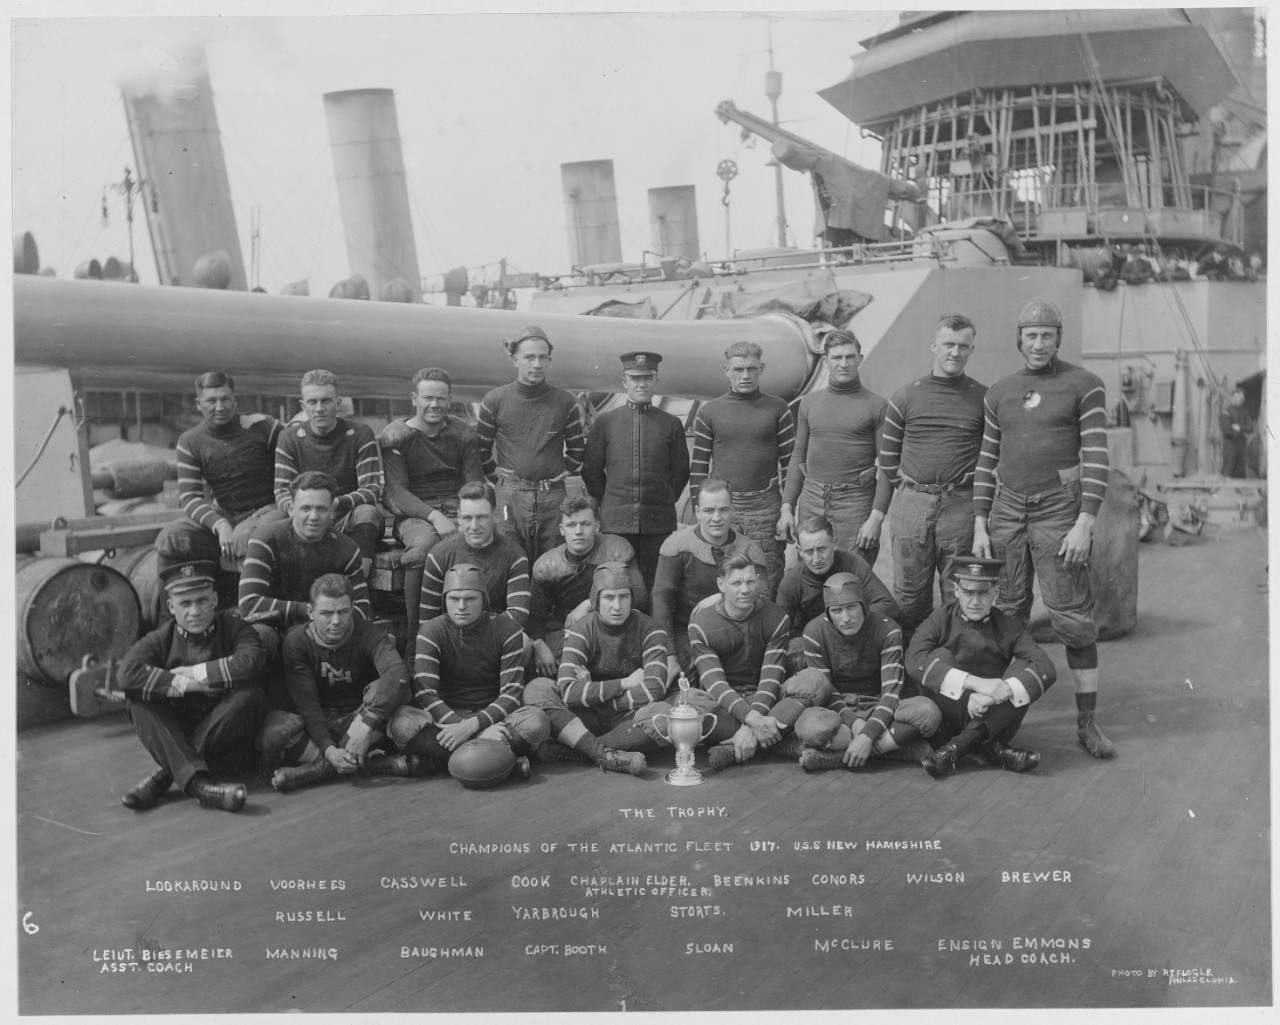 USS New Hampshire Football Team Champions of the Atlantic Fleet 1917